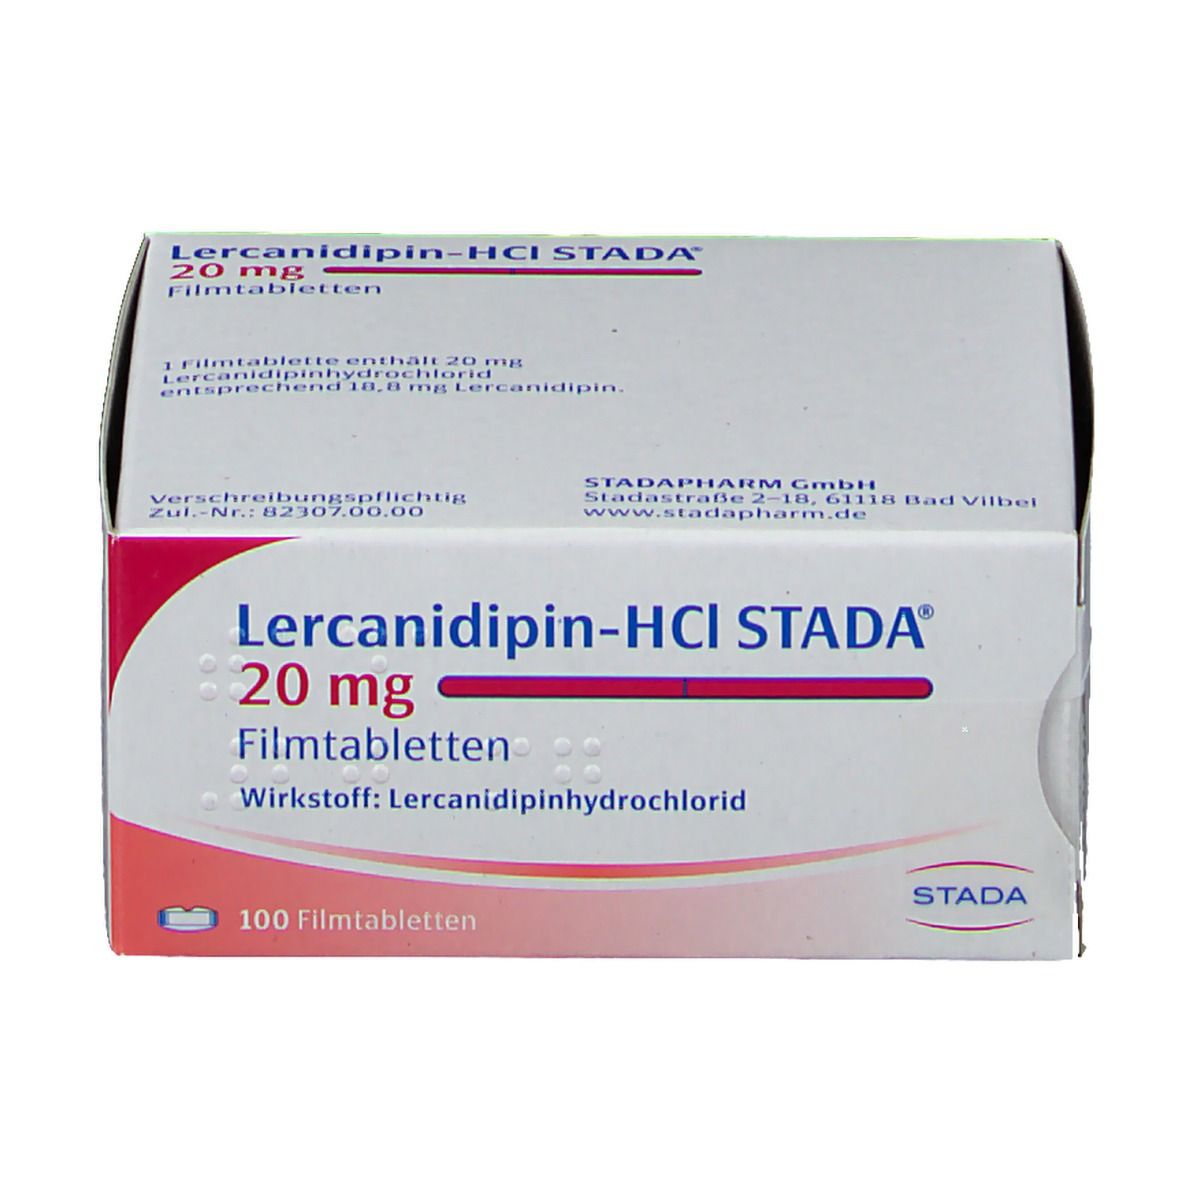 Lercanidipin-HCL STADA® 20 mg